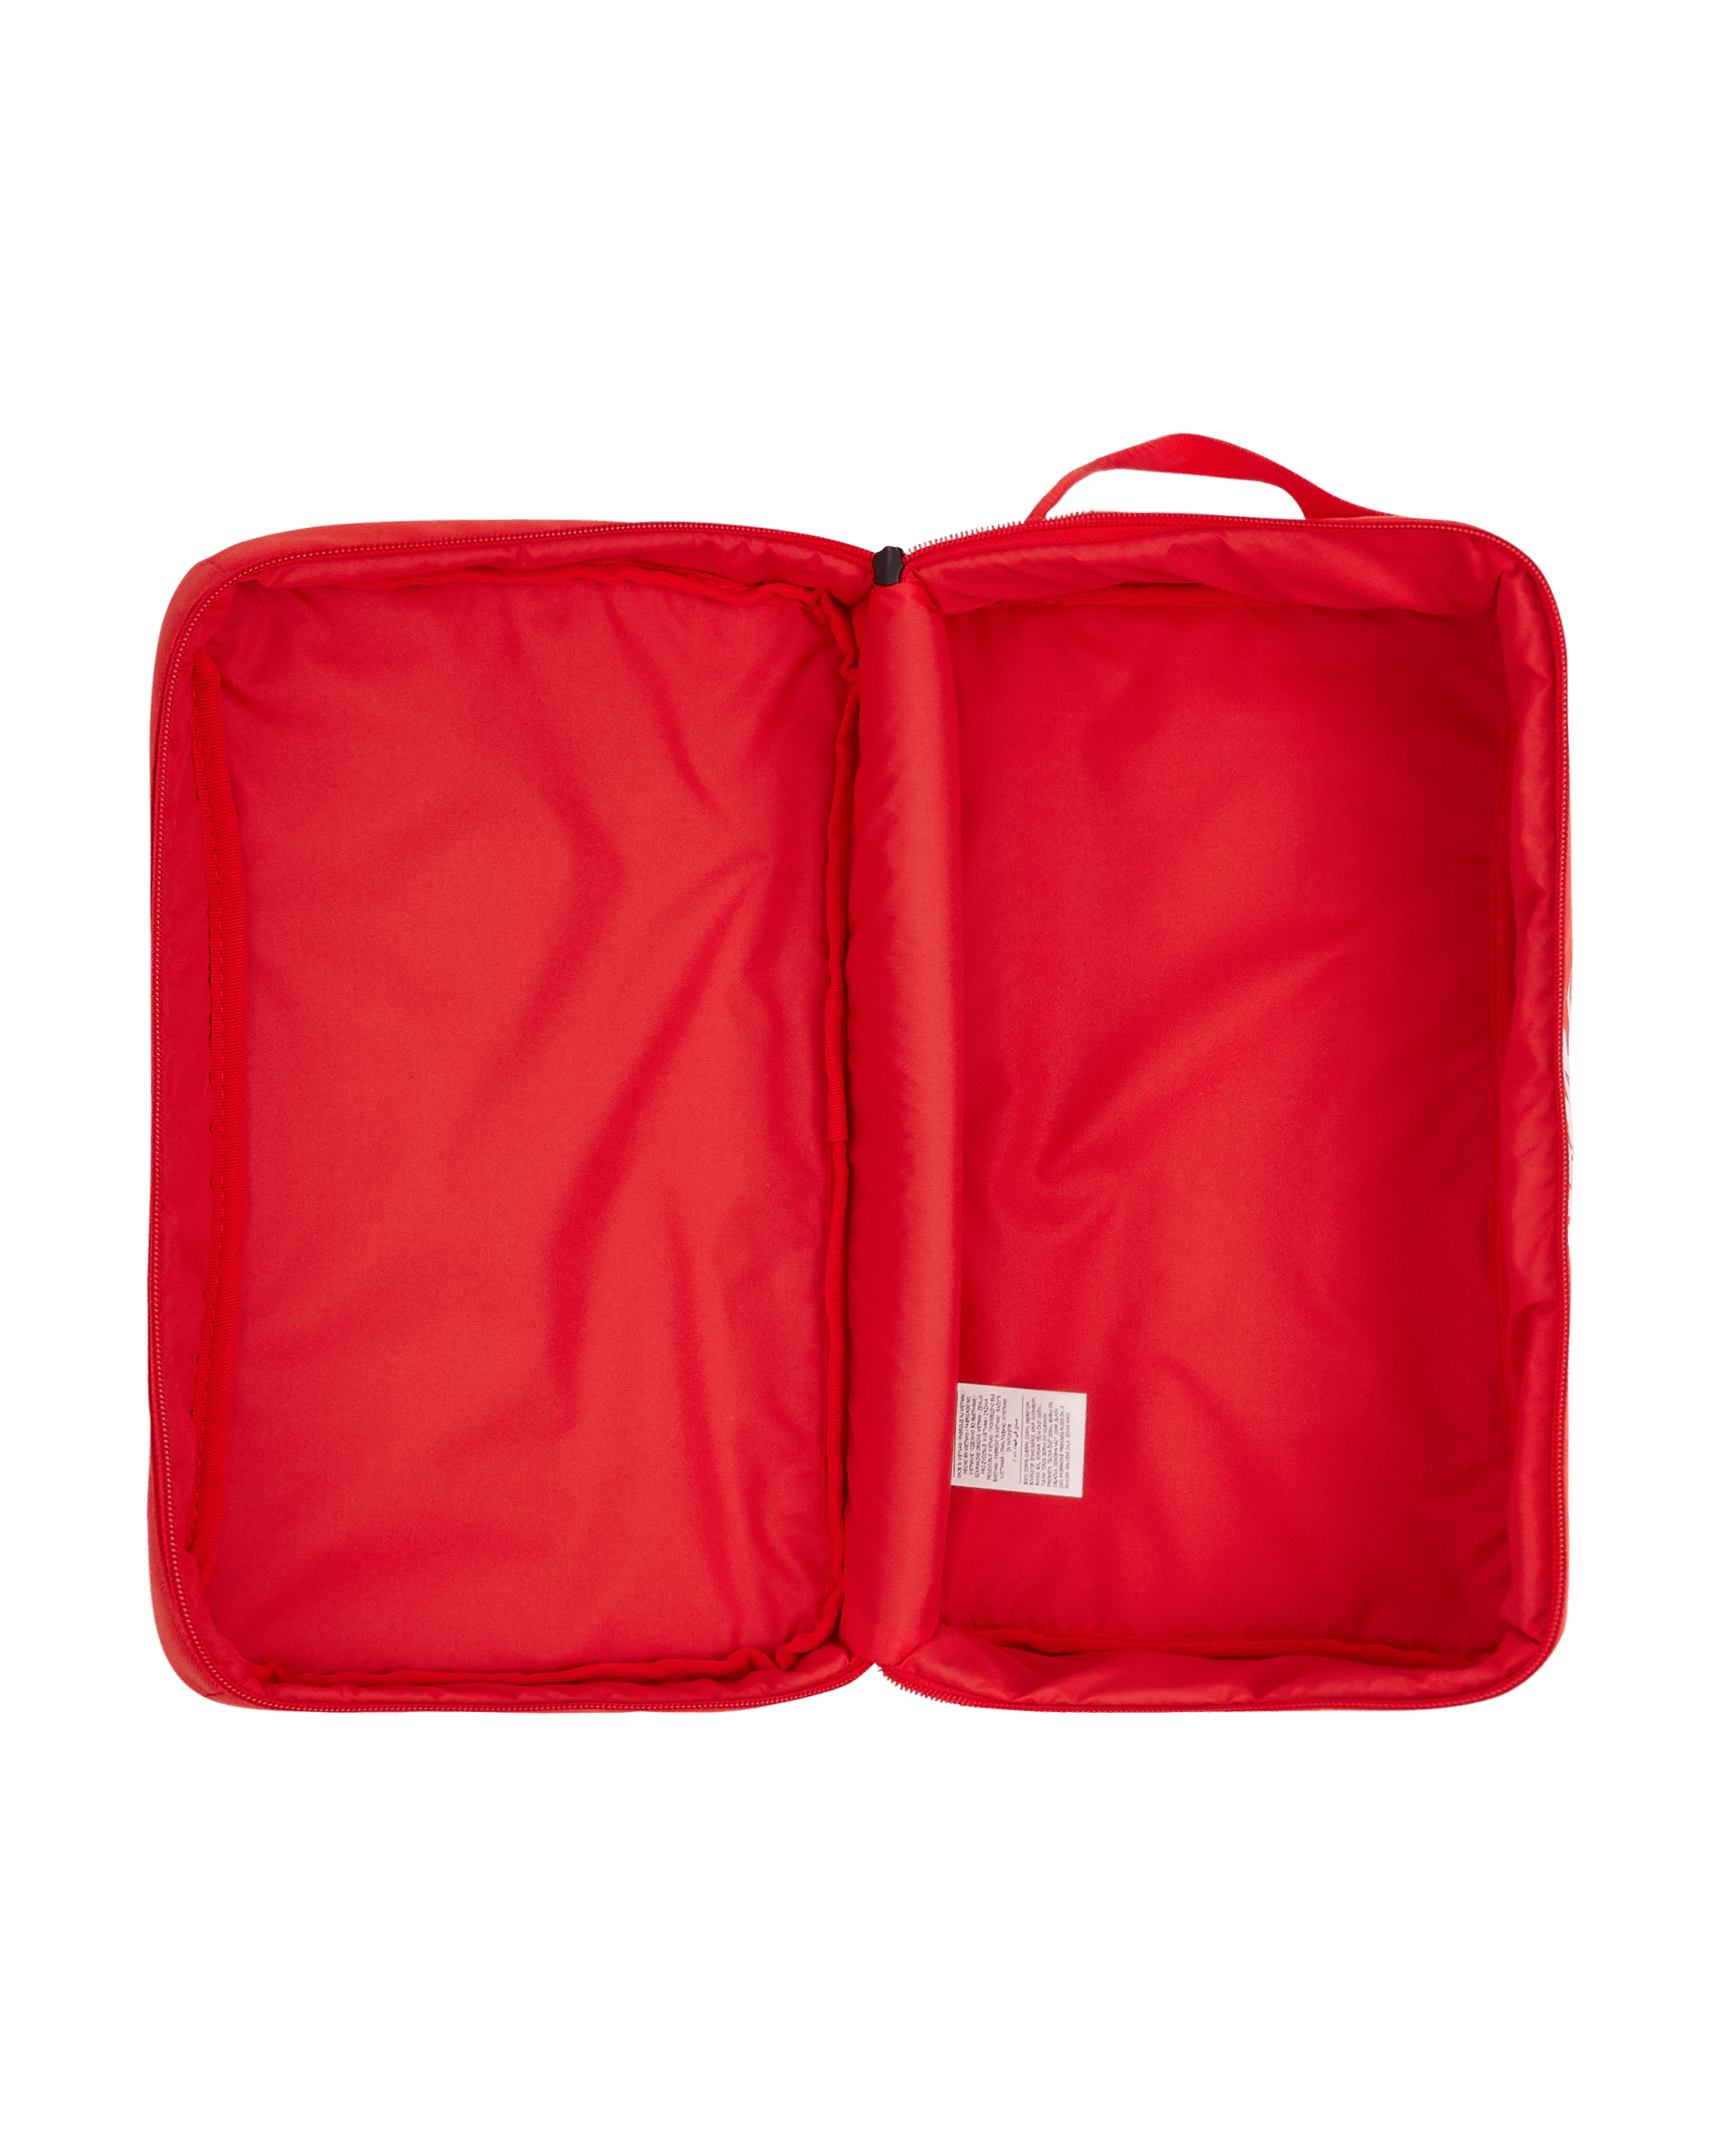 Nike Shoe Box Orange/Orange Bags and Backpacks Cases BA6149-810